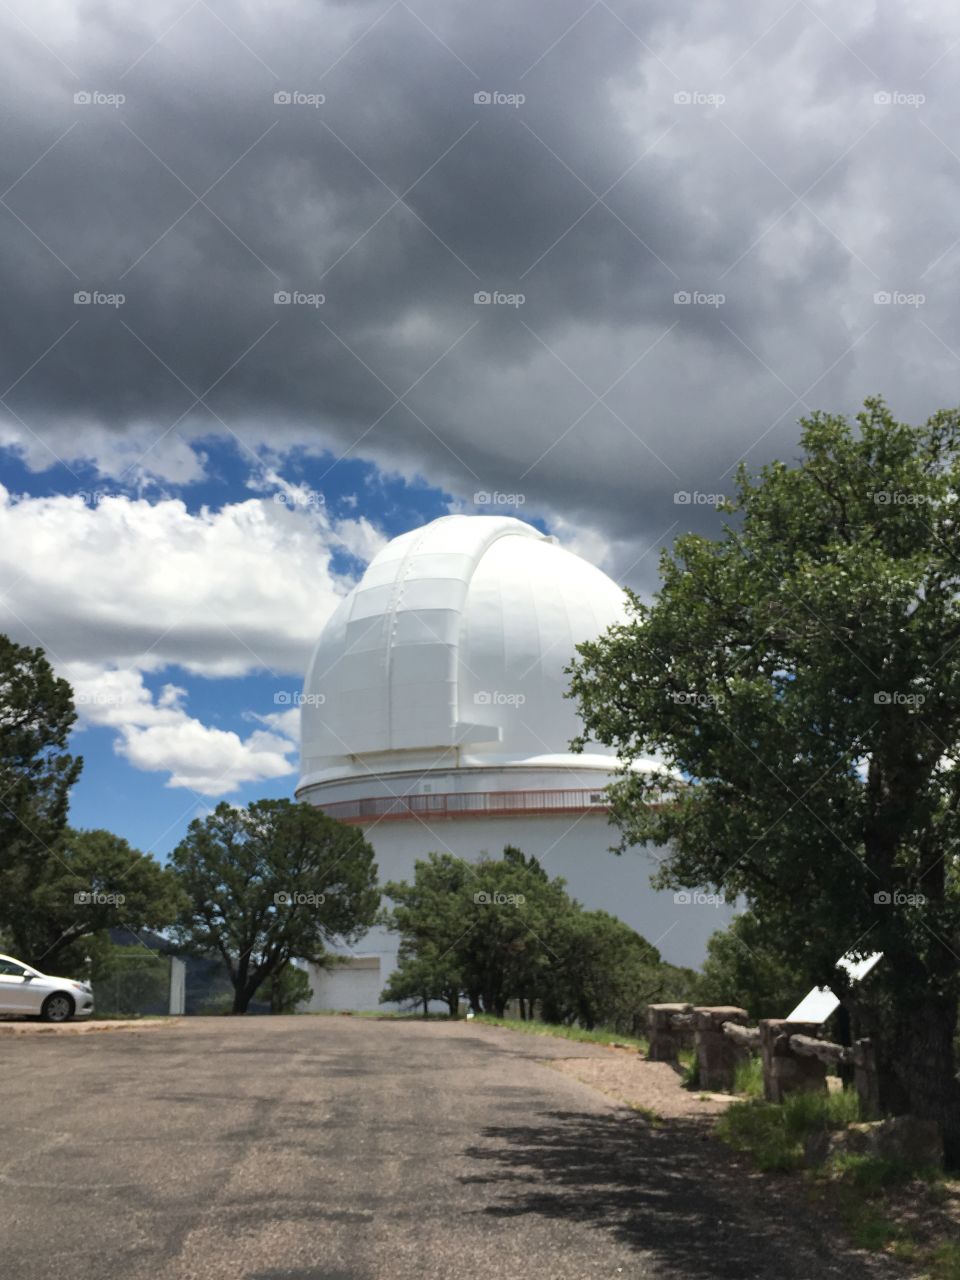 McDonald's Observatory 